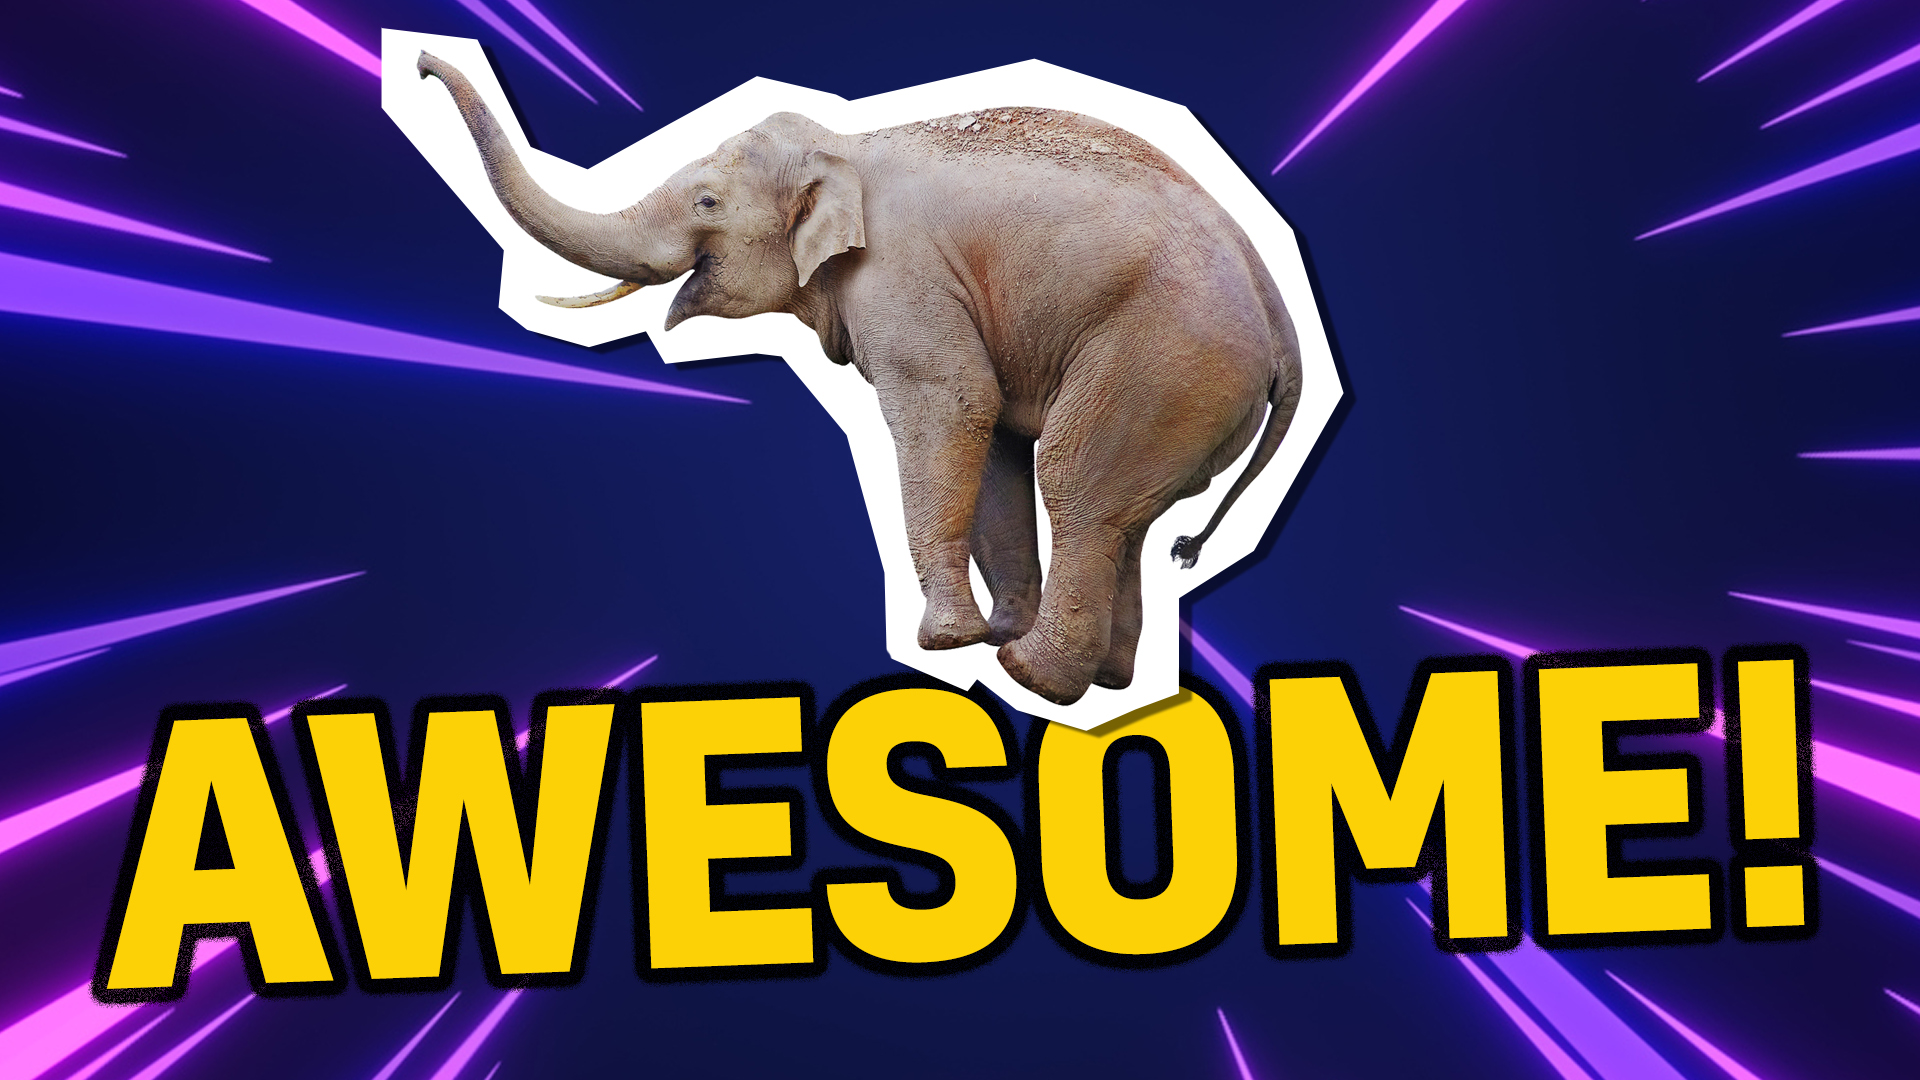 Elephant says awesome!